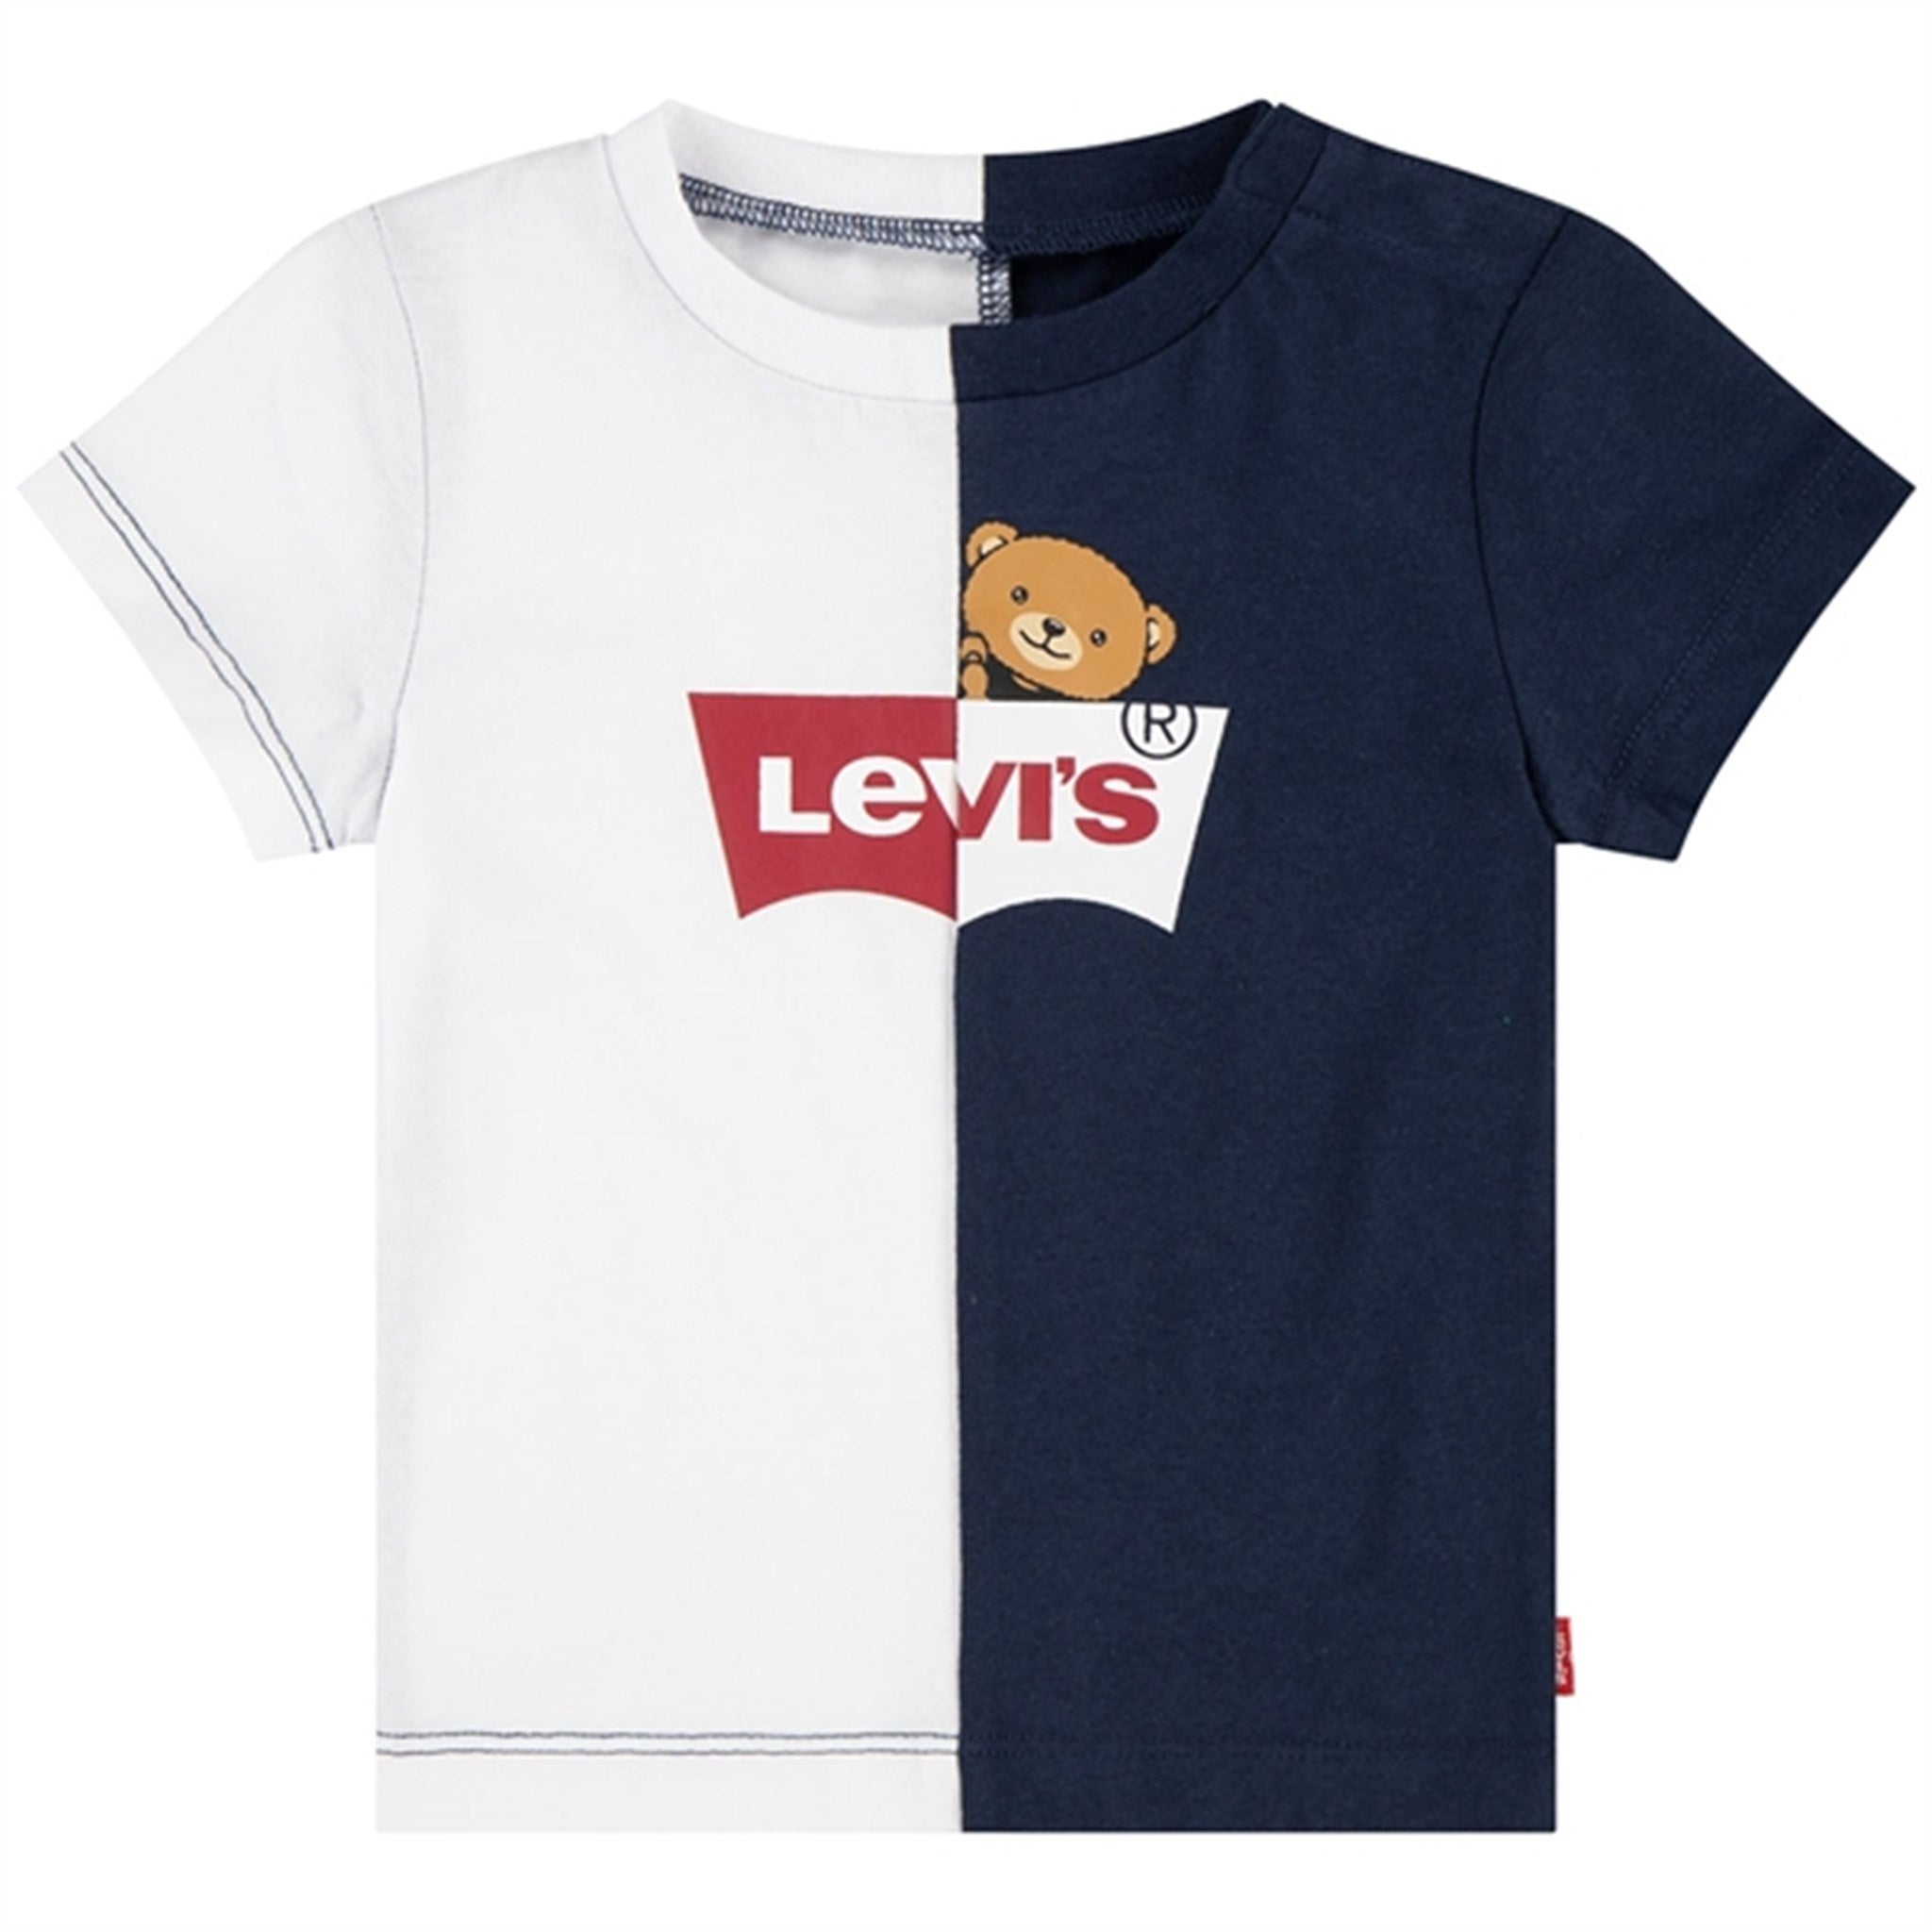 Levi's Bebis Spliced Graphic T-Shirt Dress Blues